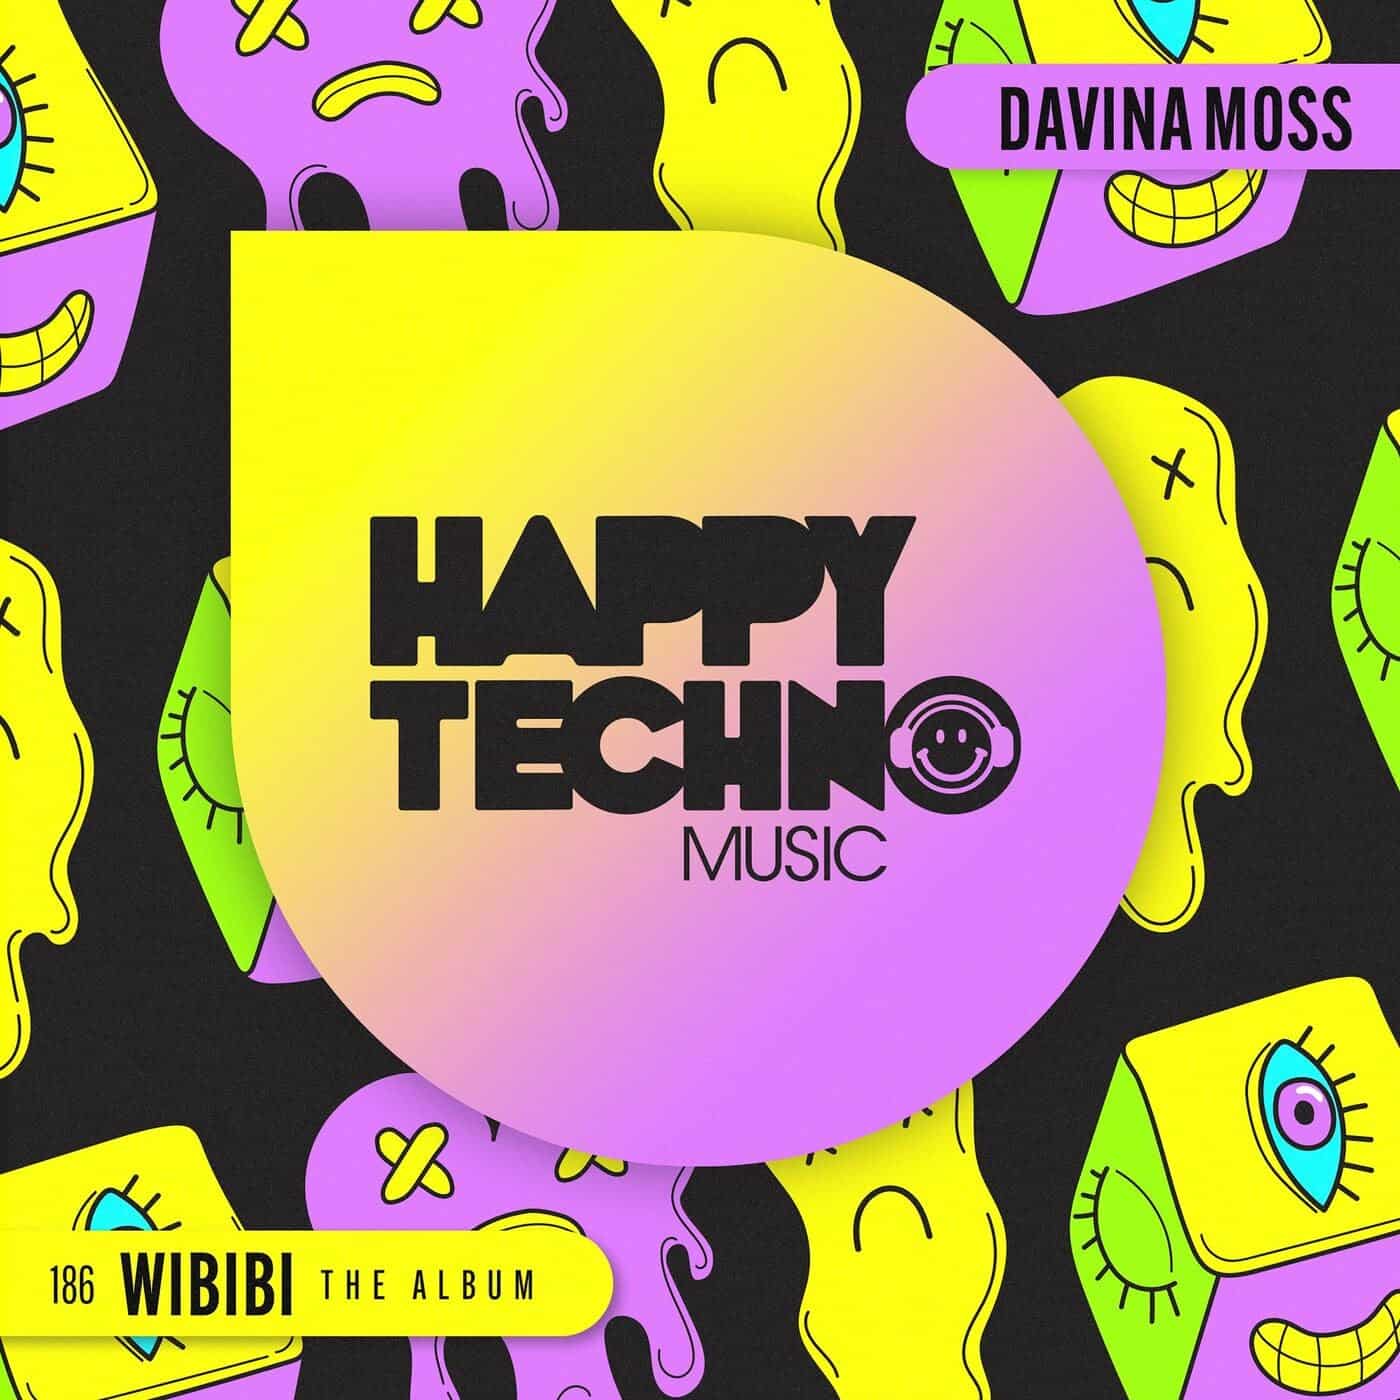 image cover: Wibibi by Davina Moss on Happy Techno Music